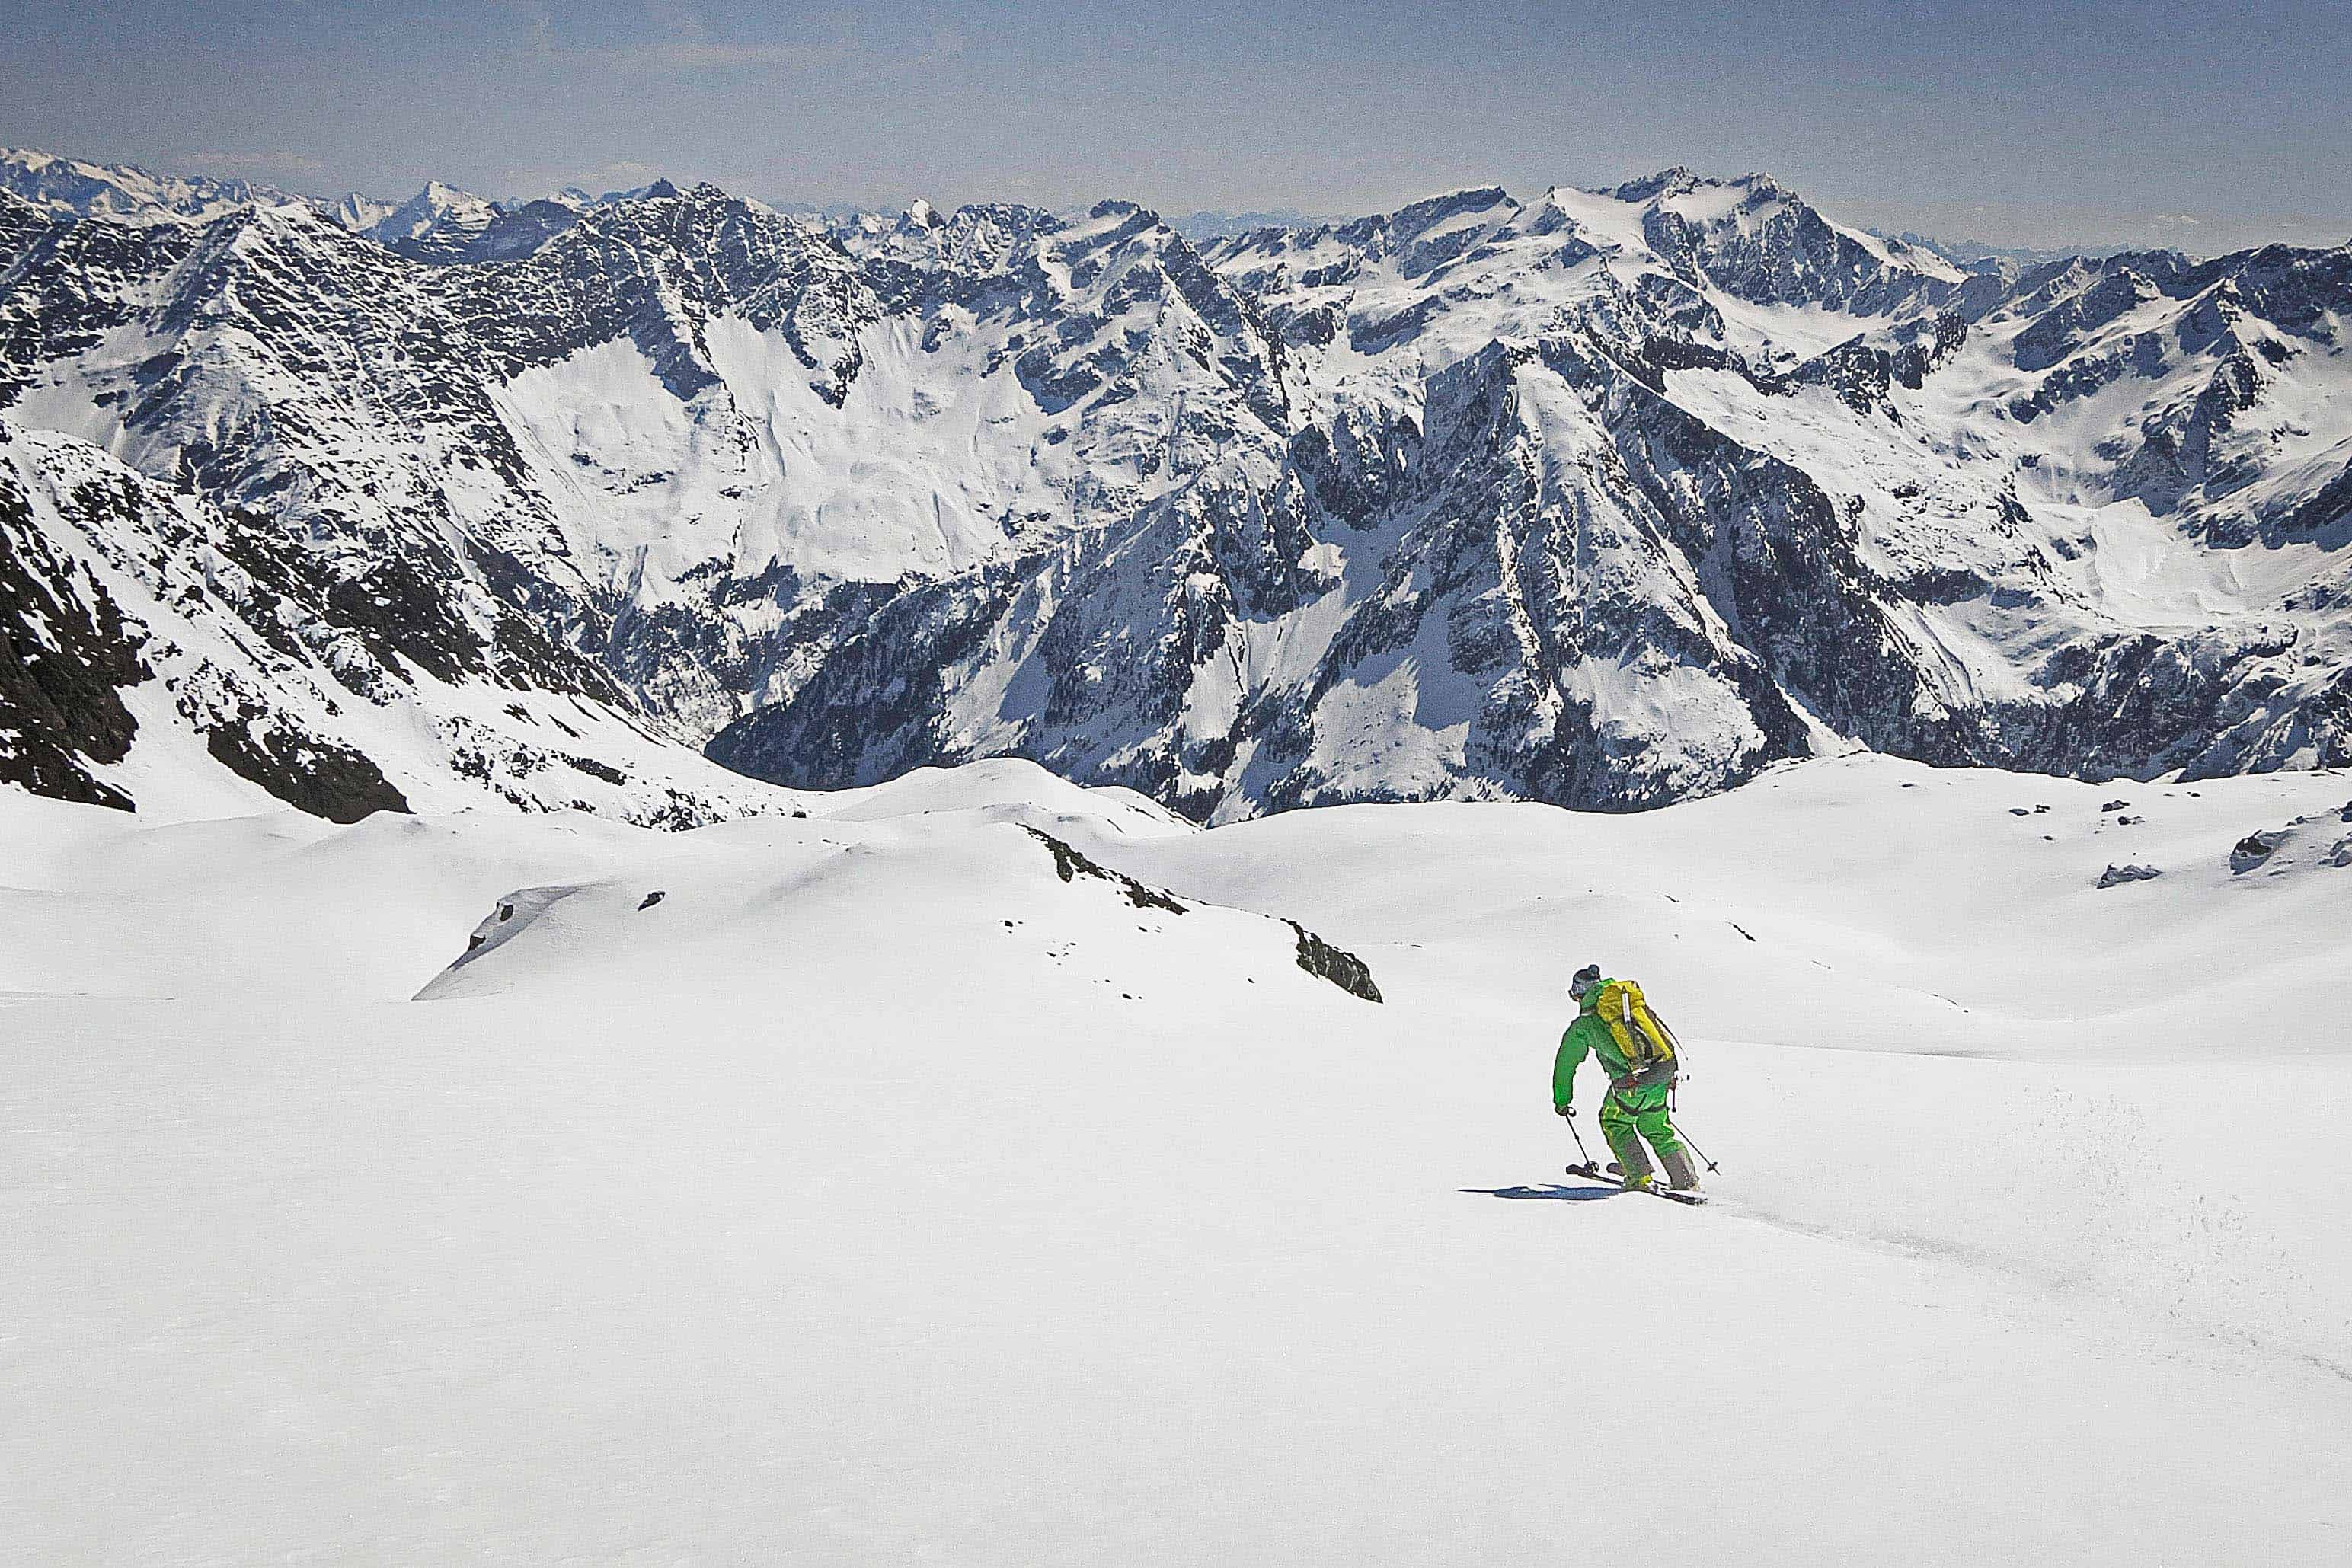 freeride st.anton arlberg off piste skiing mountain guide piste to powder ski guide backcountry powder skiing